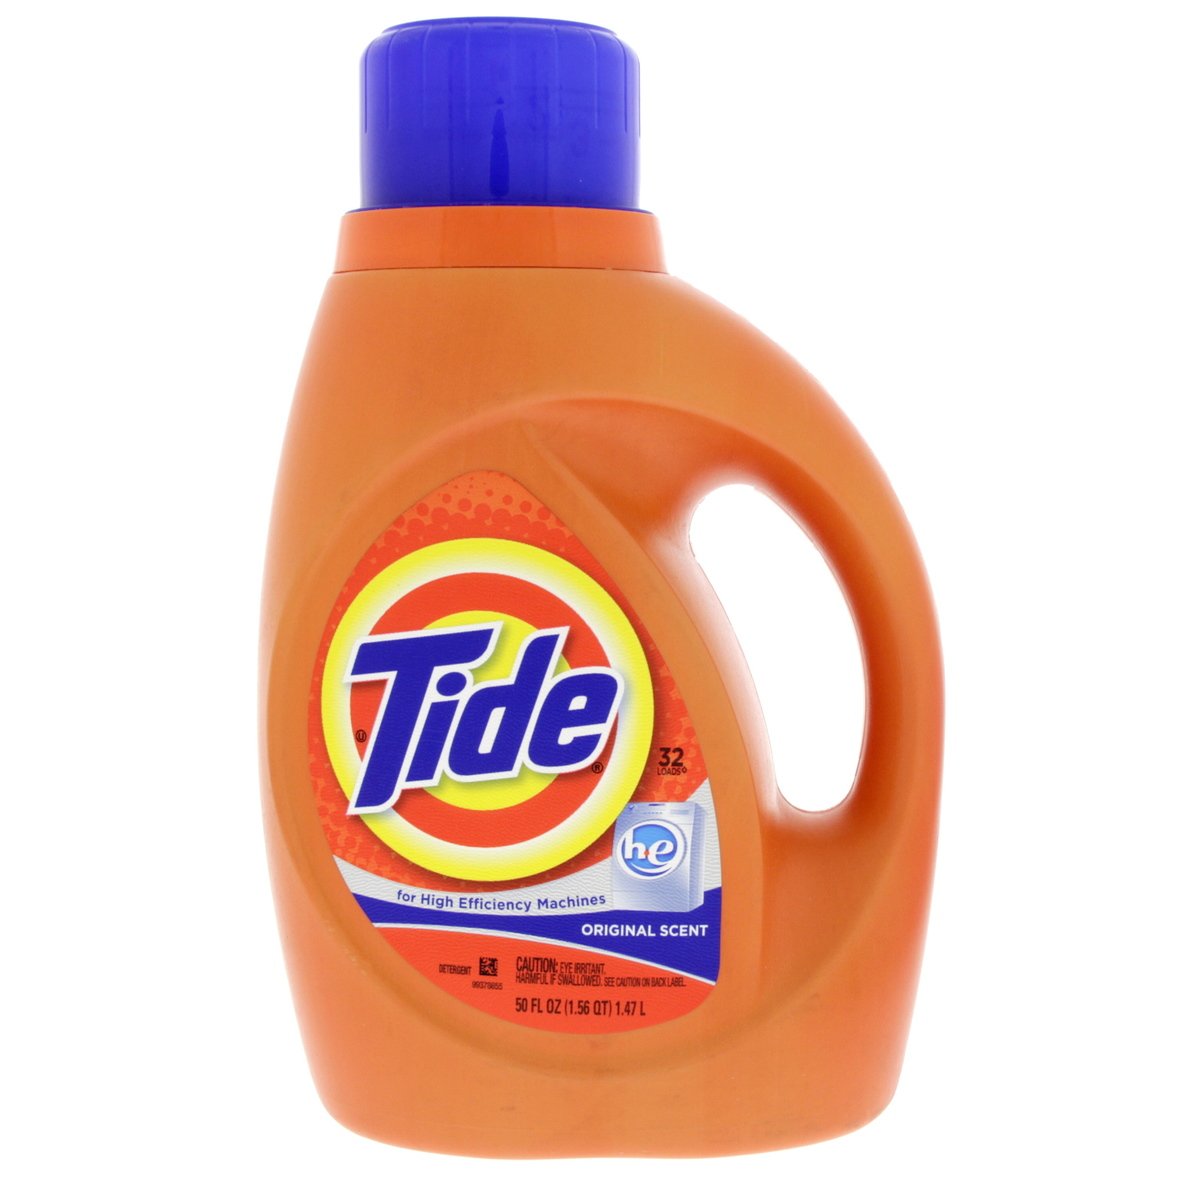 Tide Liquid Detergent Original Scent 32 Loads 1.47Litre